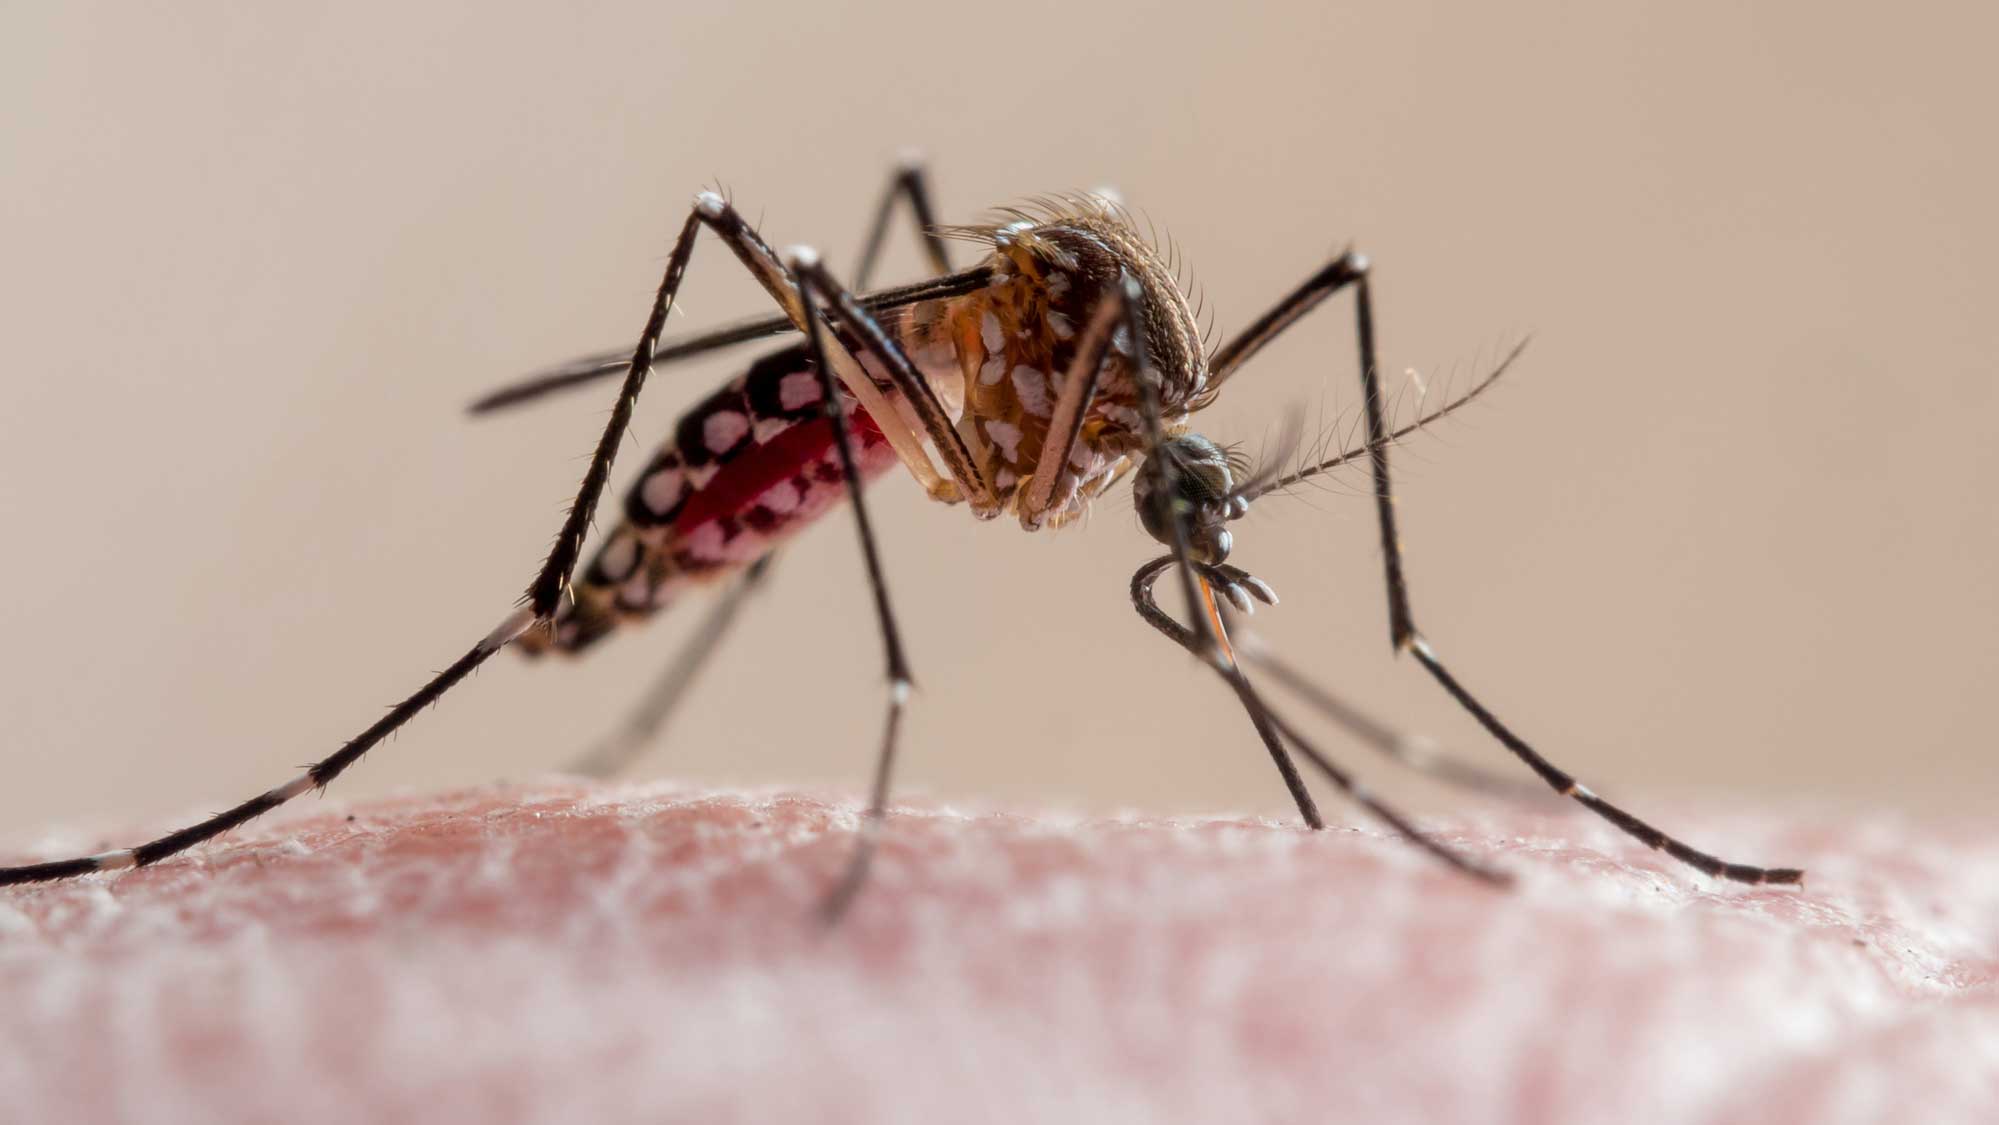 Malaria found in new hiding place in the body